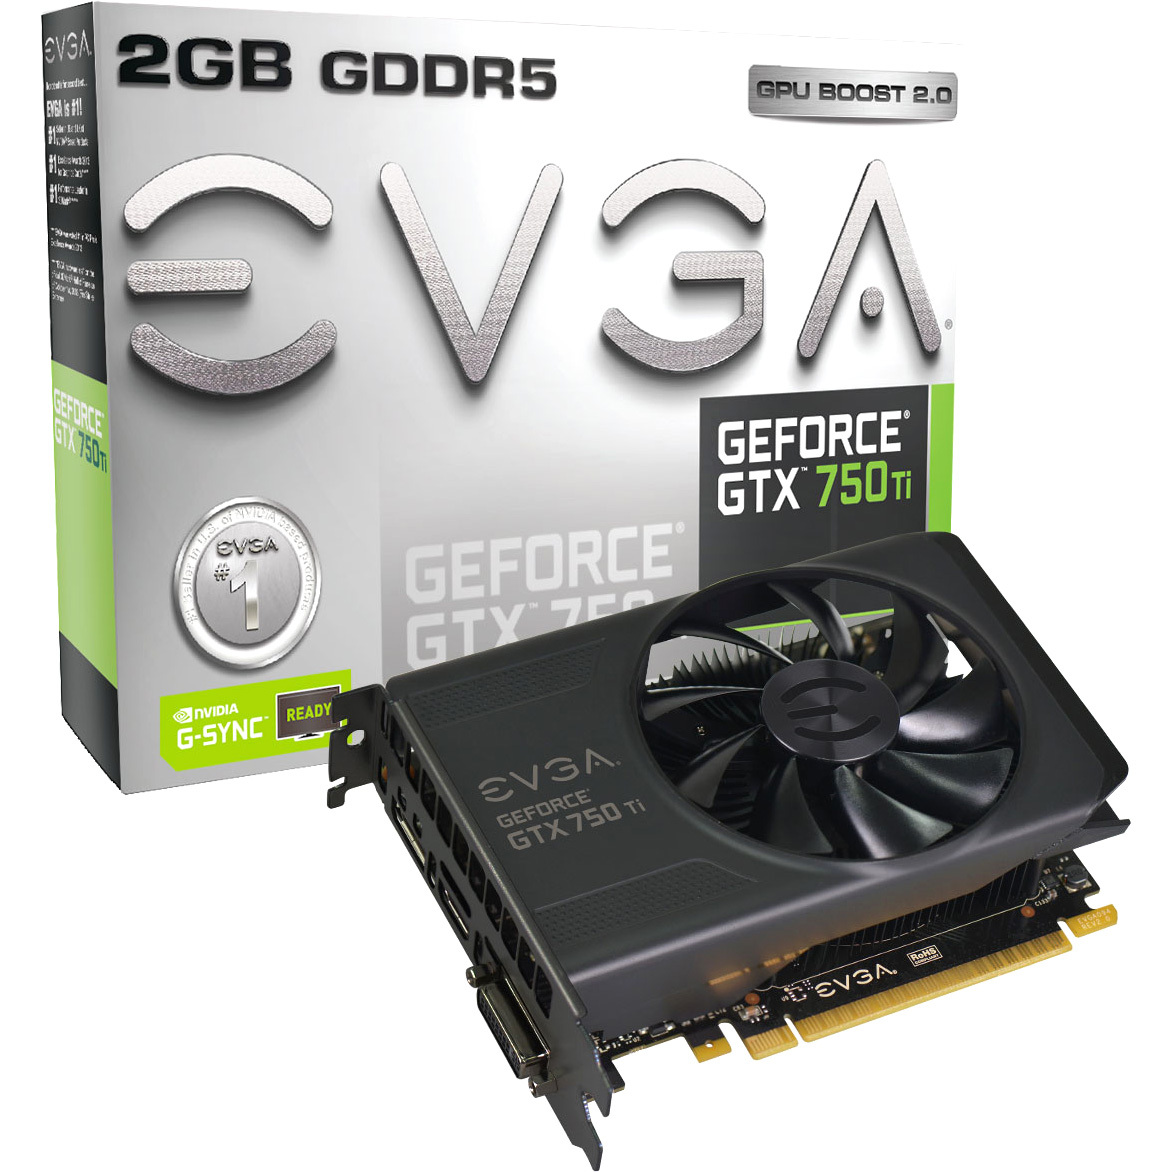 EVGA GeForce GTX 750 Ti - Graphics card - GF GTX 750 Ti - 2 GB GDDR5 - PCIe 3.0 x16 - DVI, HDMI, DisplayPort - image 2 of 7